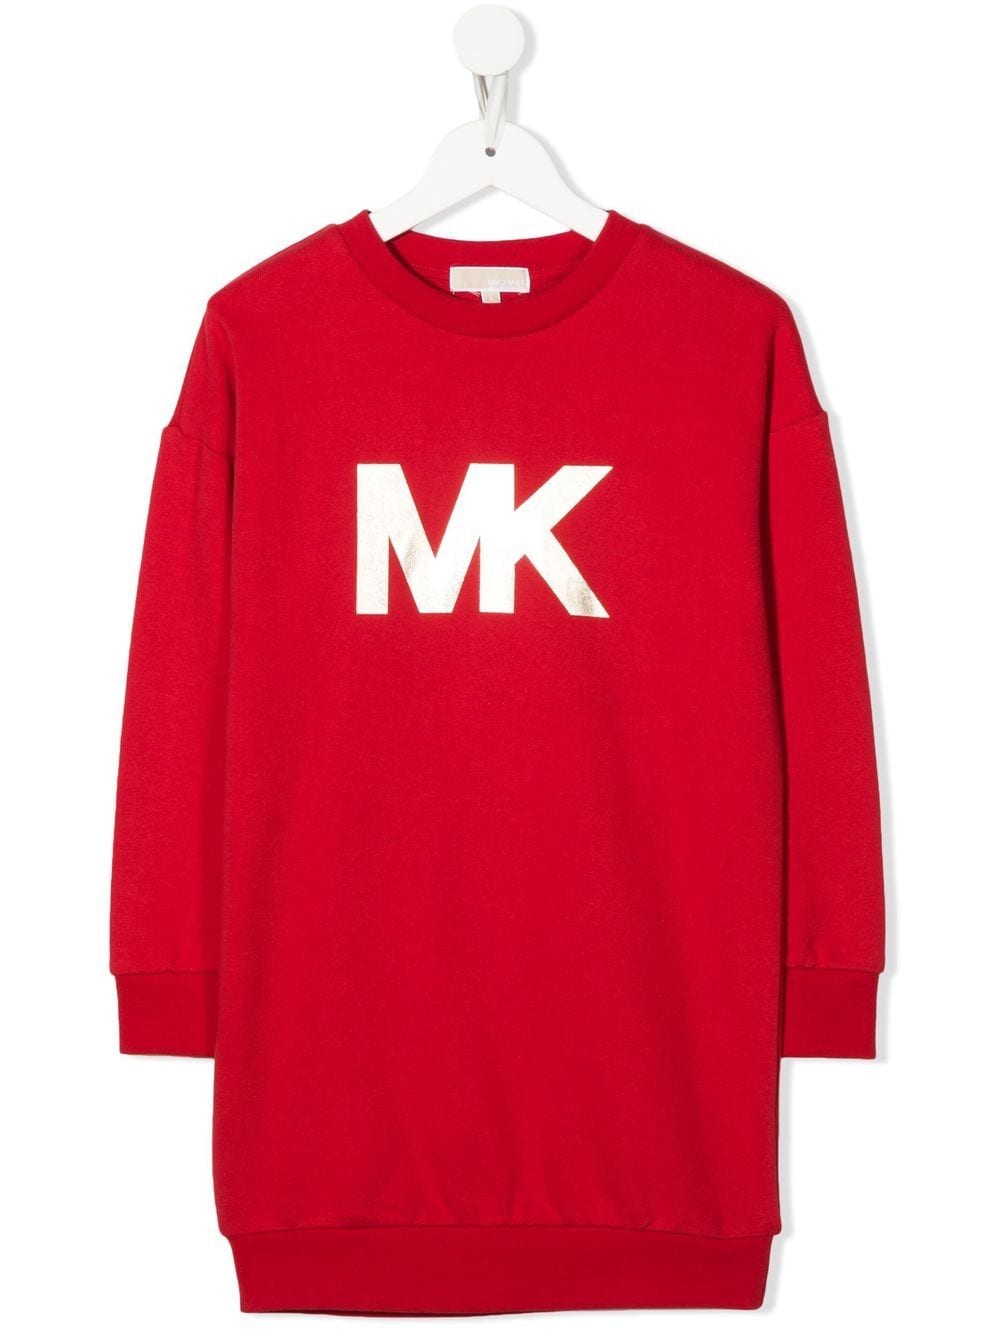 Michael Kors Kids logo-print sweatshirt dress - Red